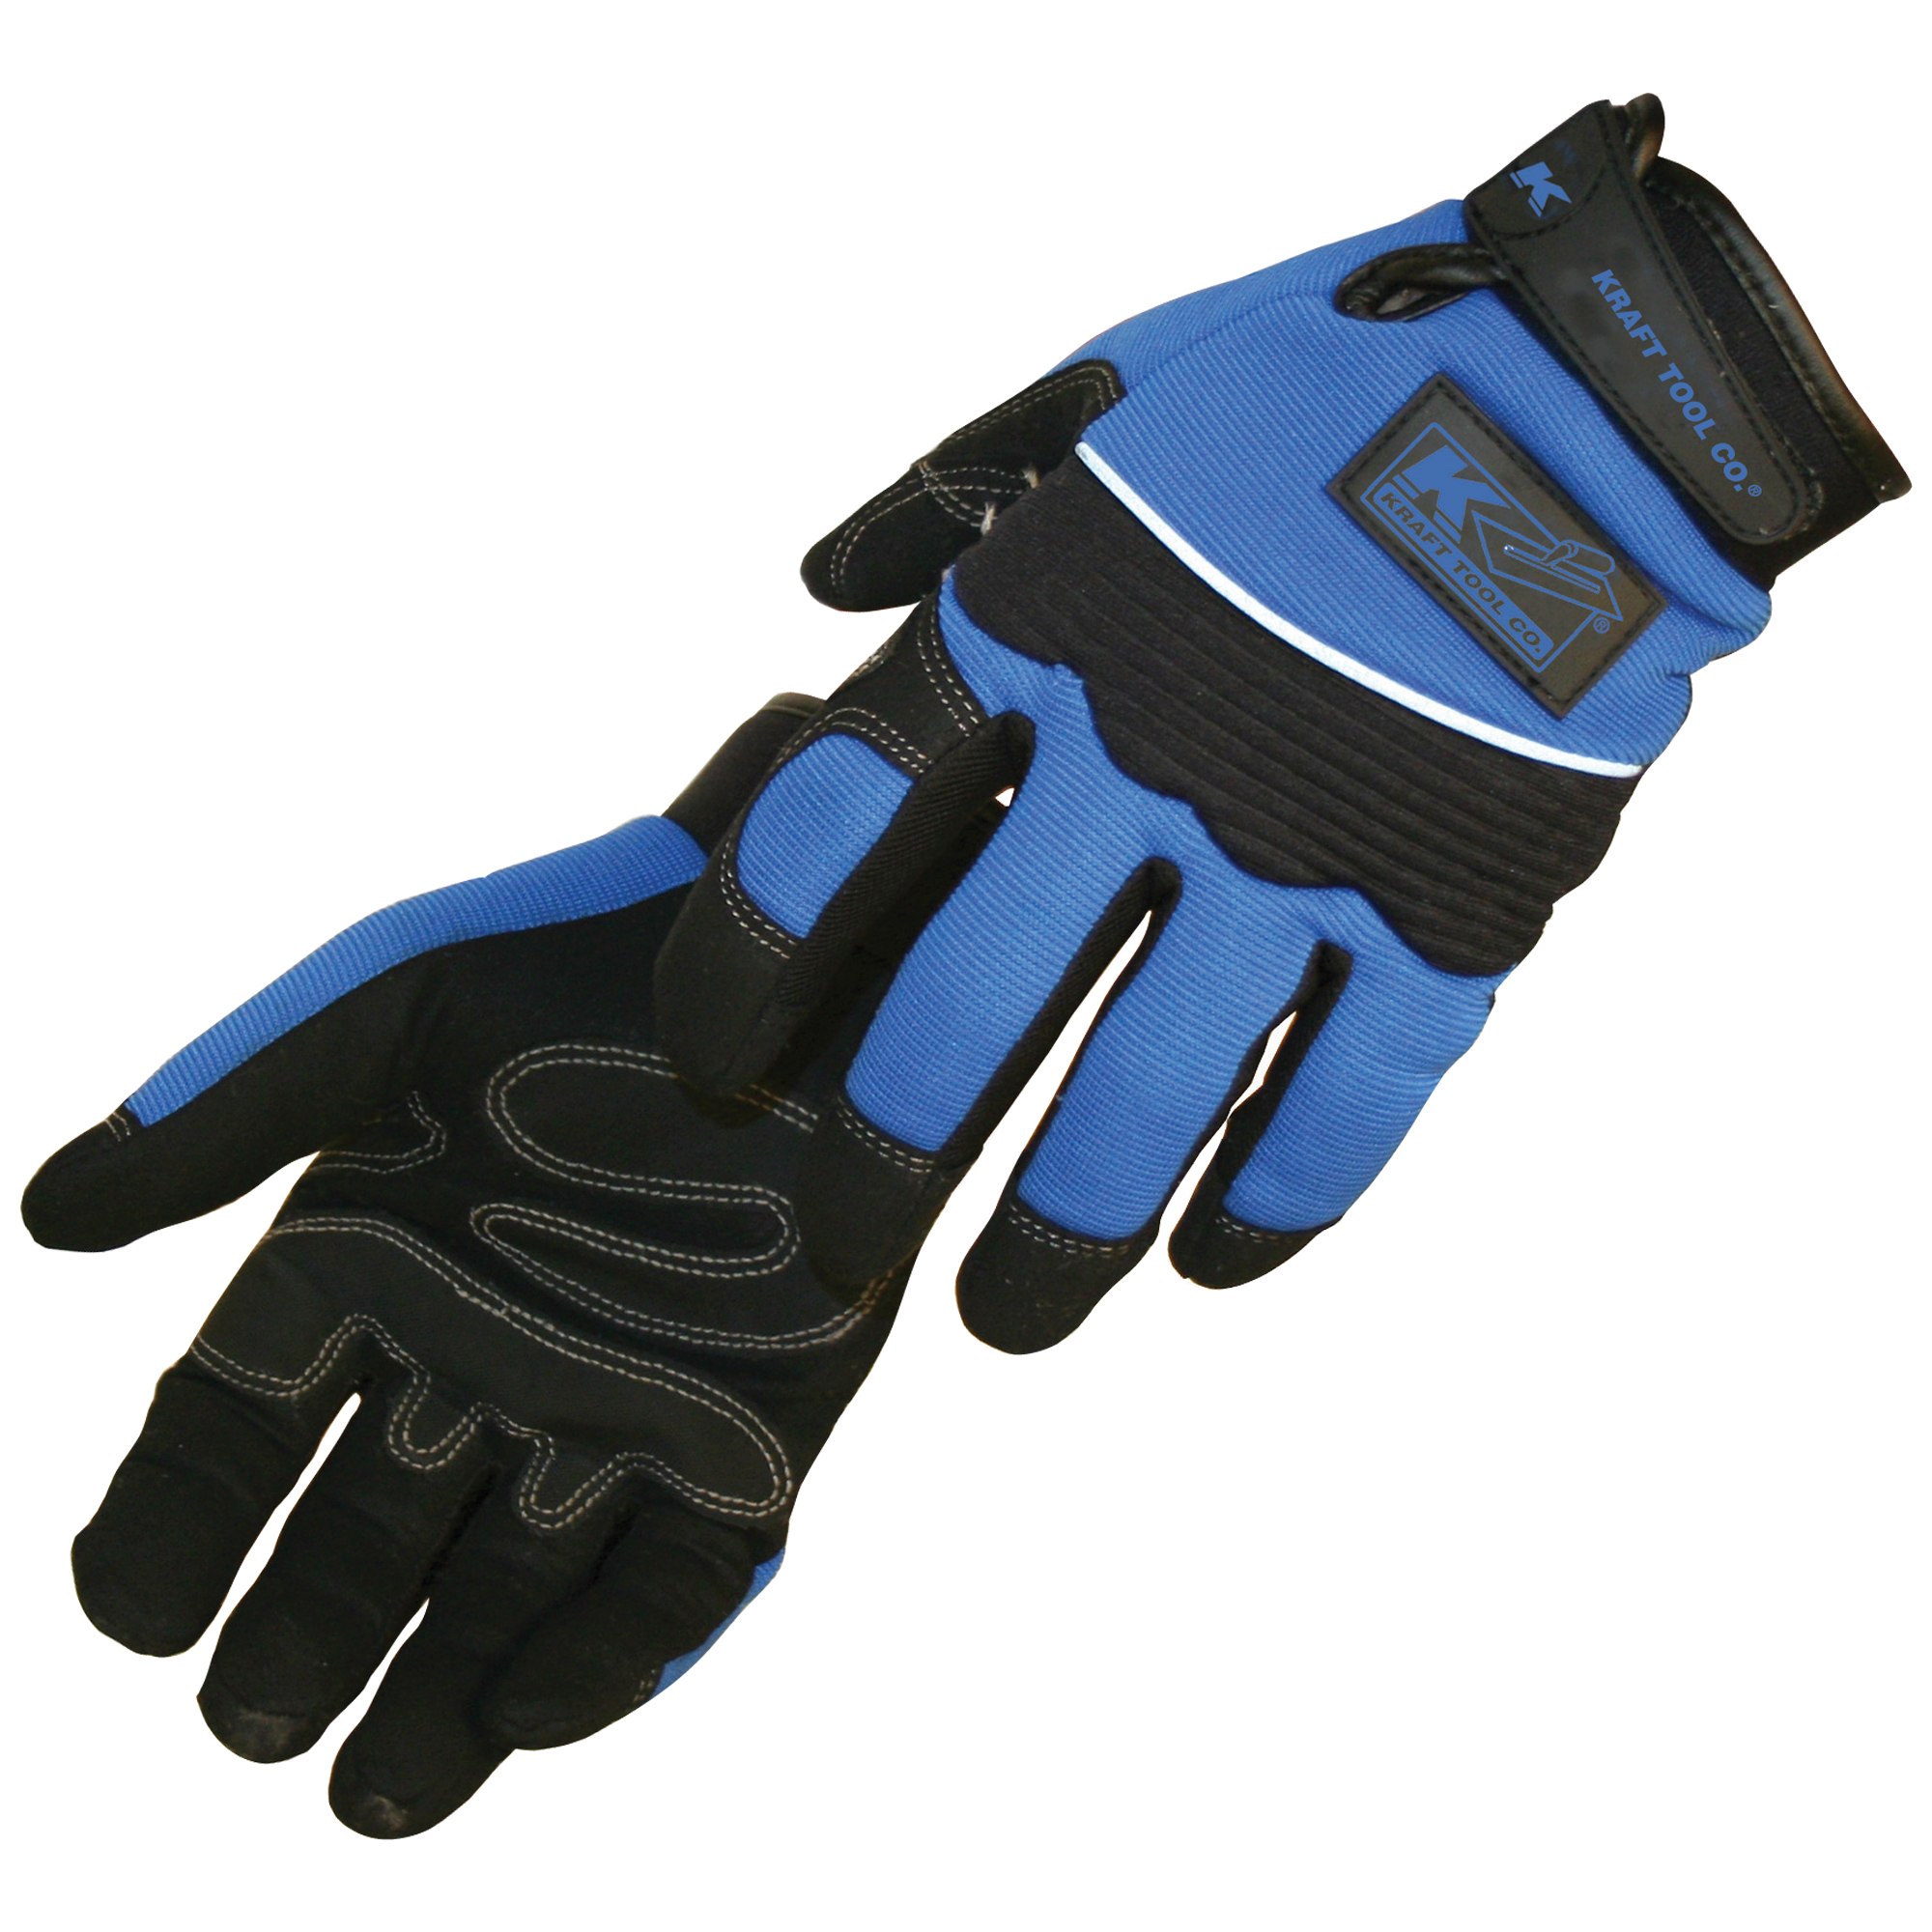 https://www.krafttool.com/images/thumbs/0291537_professional-work-gloves-large.jpeg